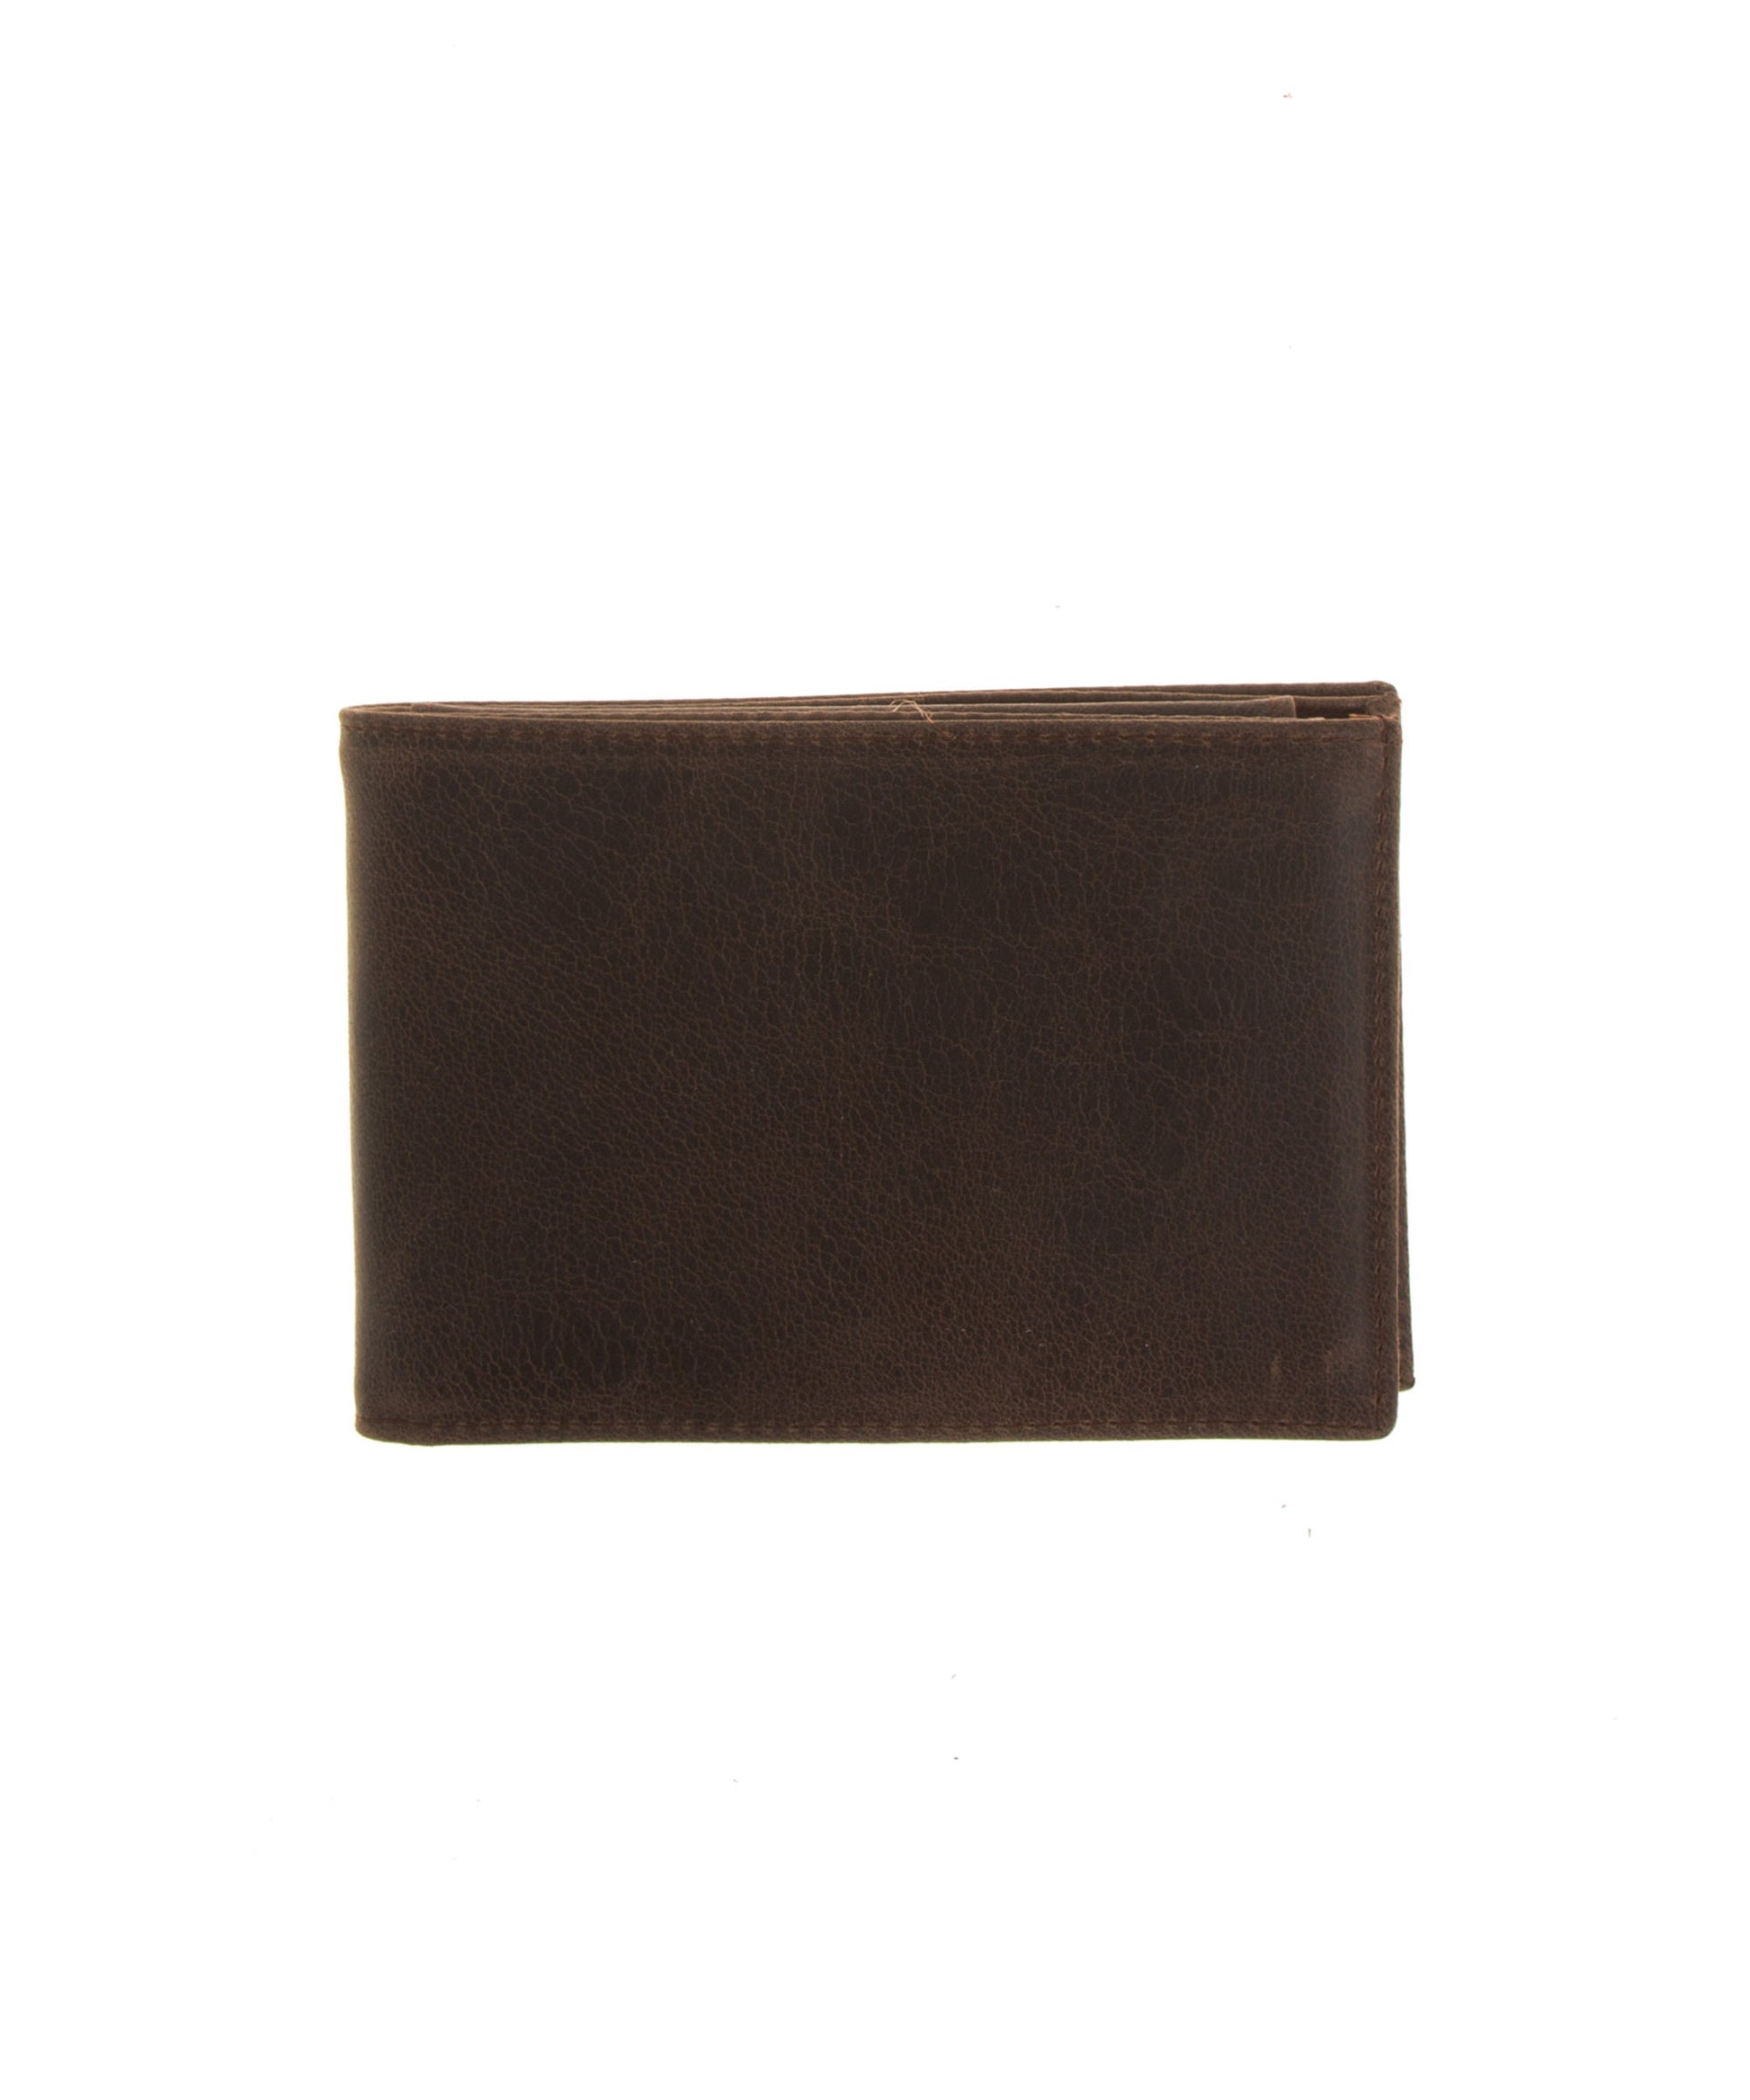 Black leather men's wallet, Minimalist genuine leather wallet, Full grain leather handmade wallet for men, Men's leather accessories